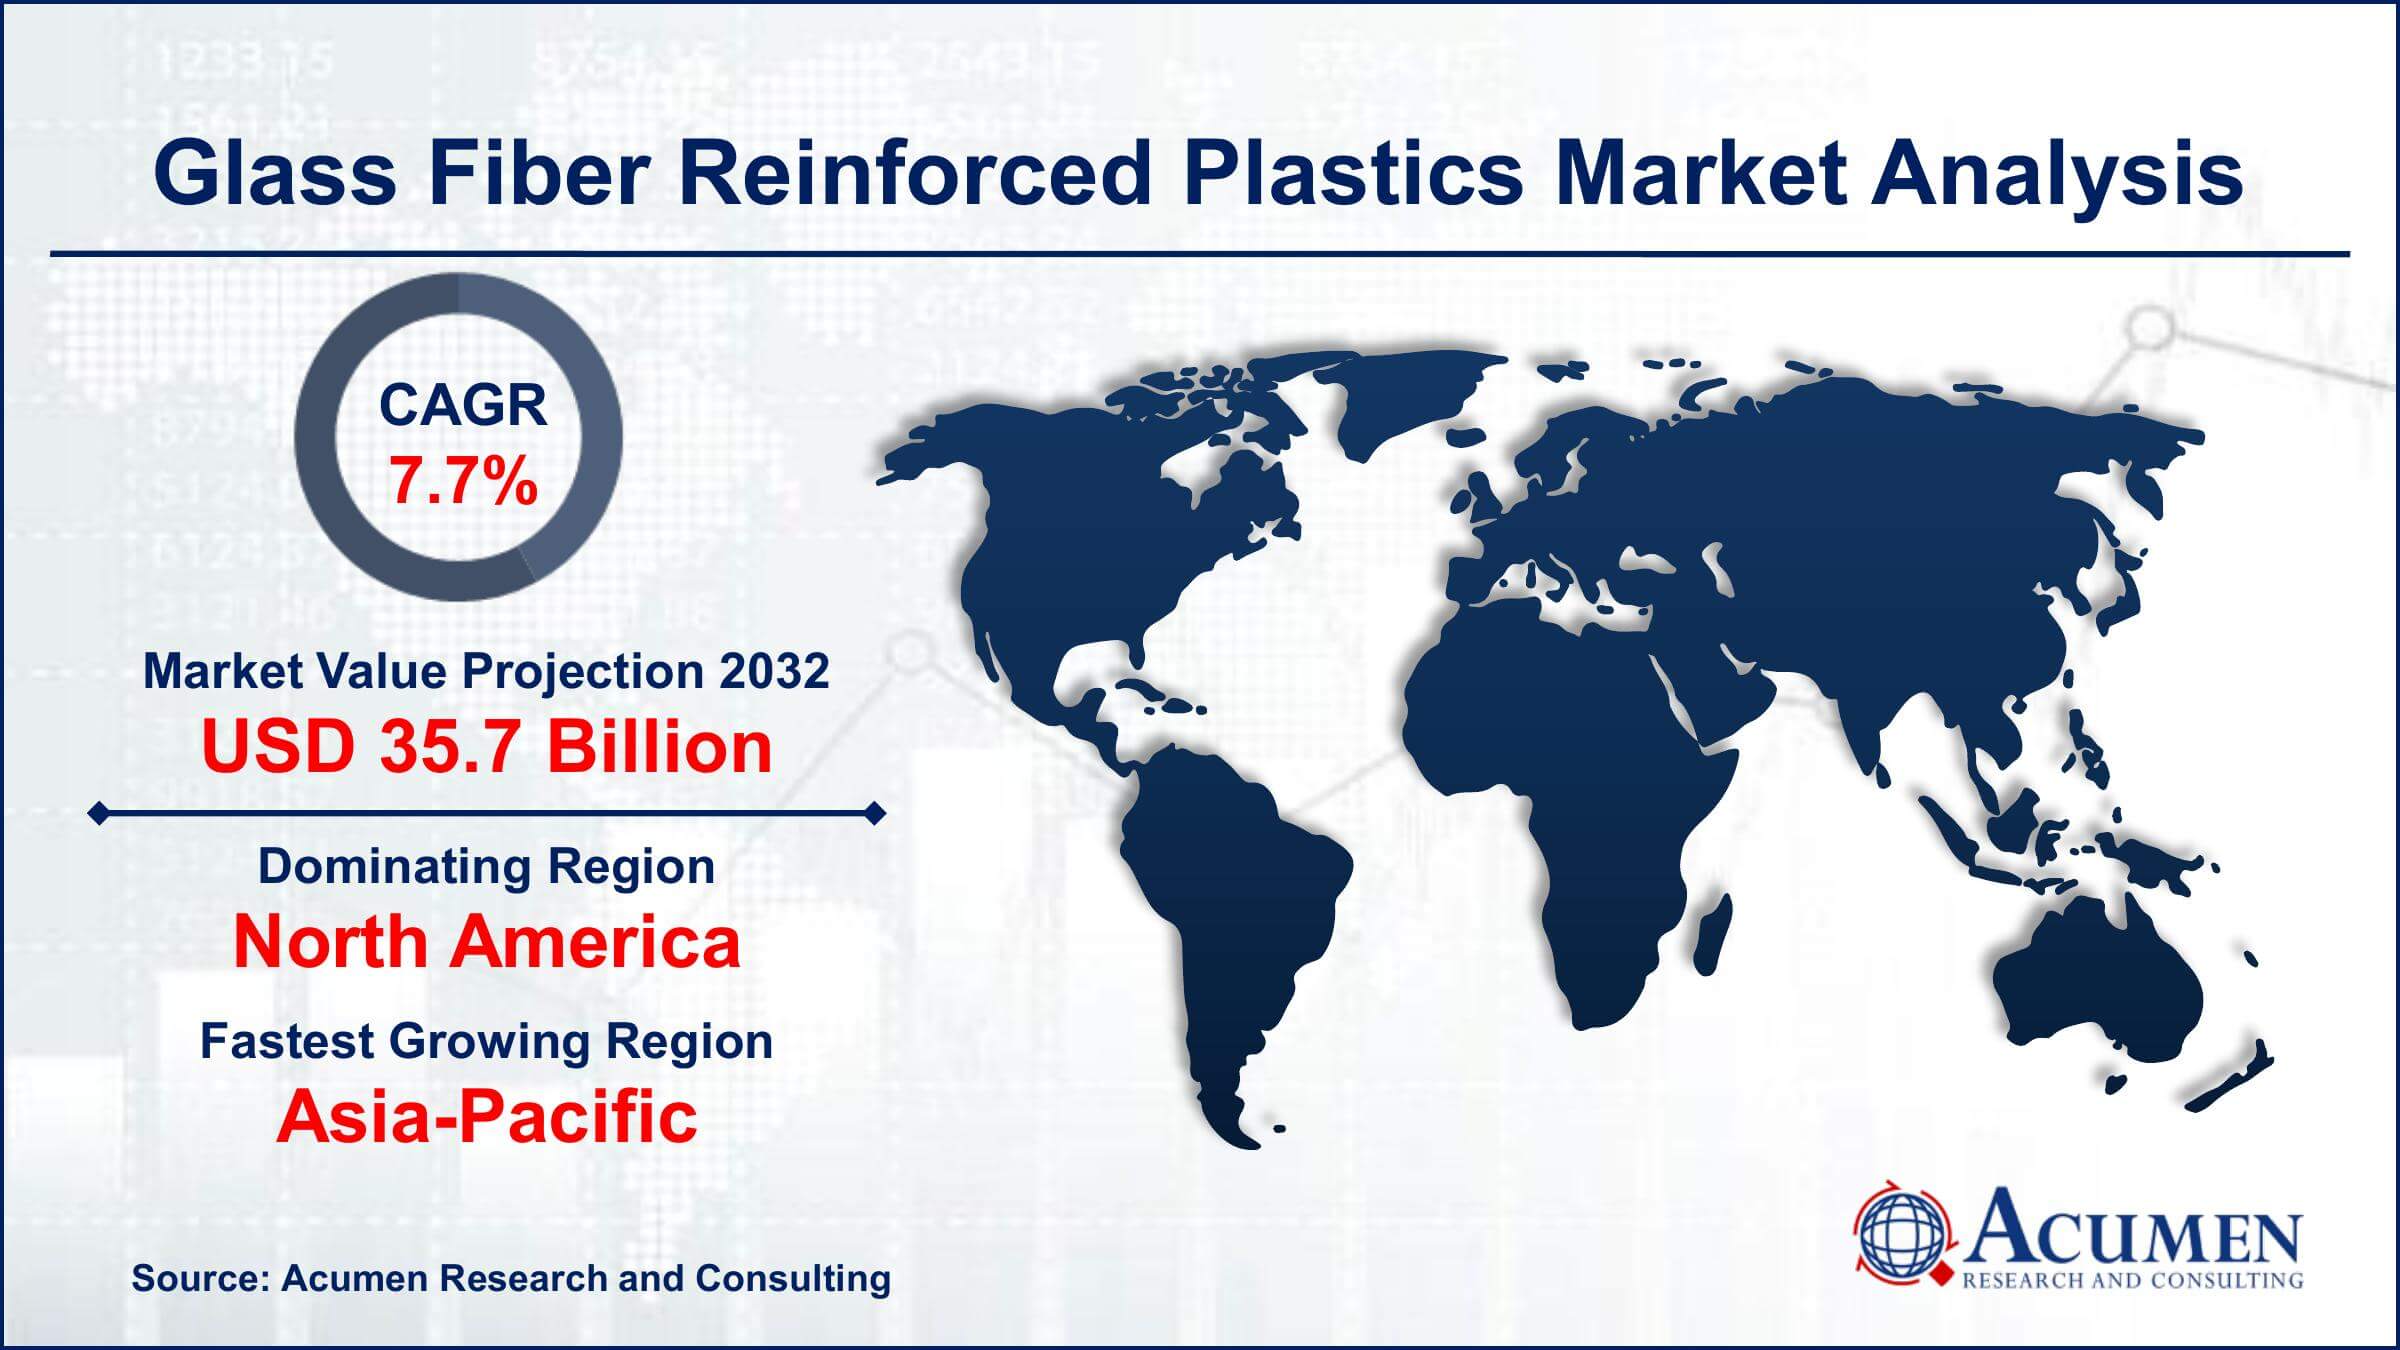 Global Glass Fiber Reinforced Plastics Market Trends